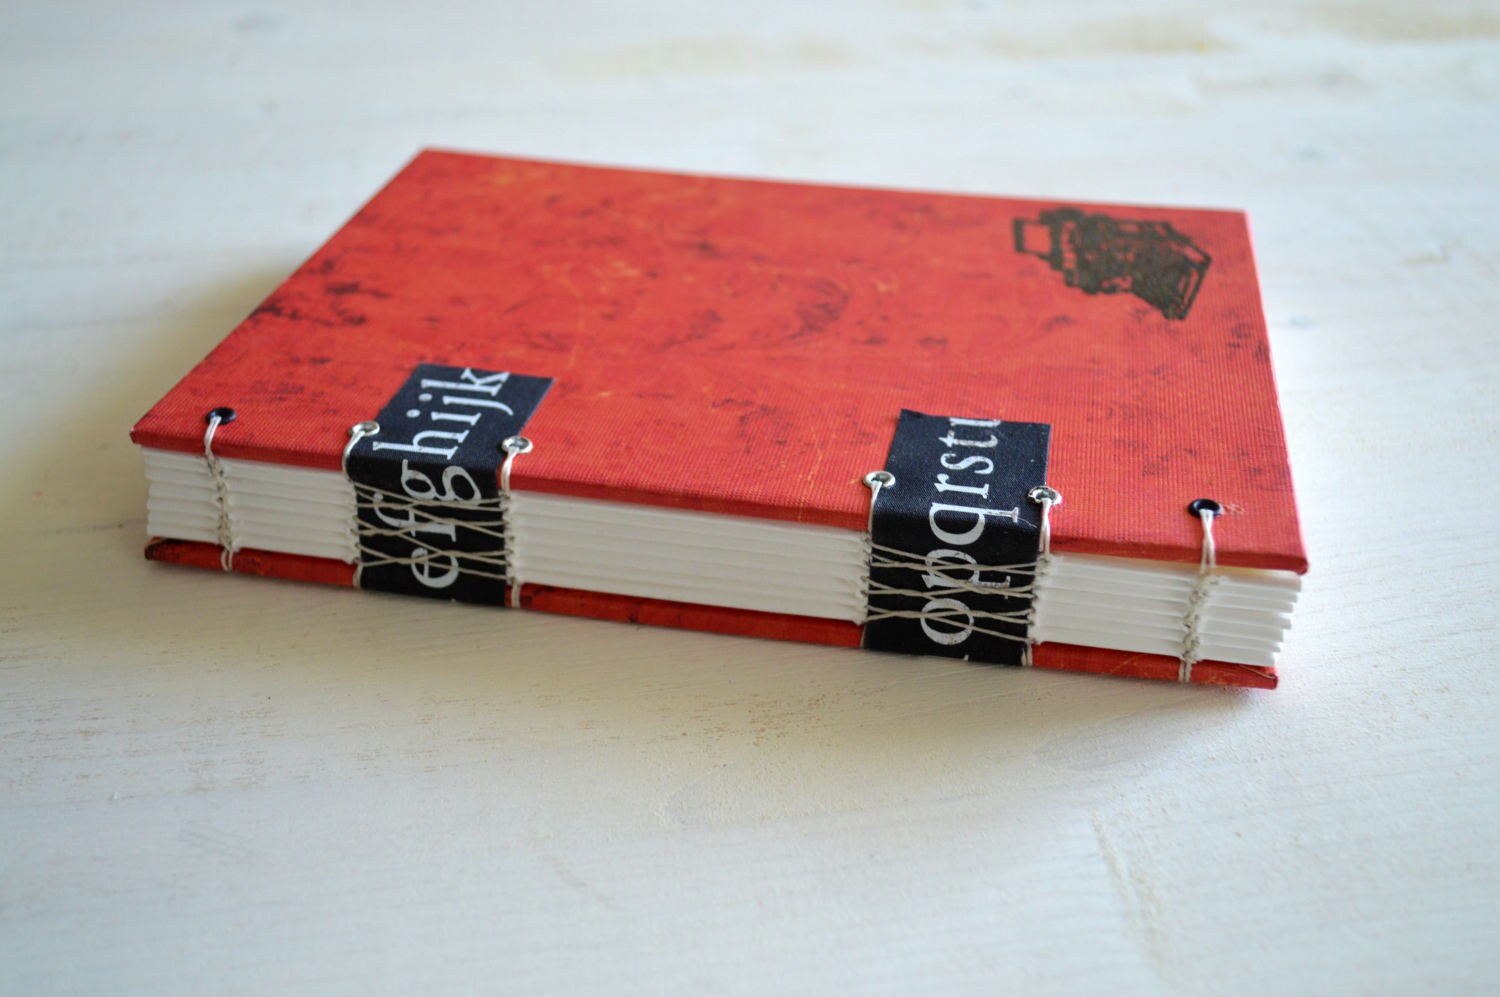 Wooden Journal Diary Memories, Blank Scrapbook, Wedding Guest Book, –